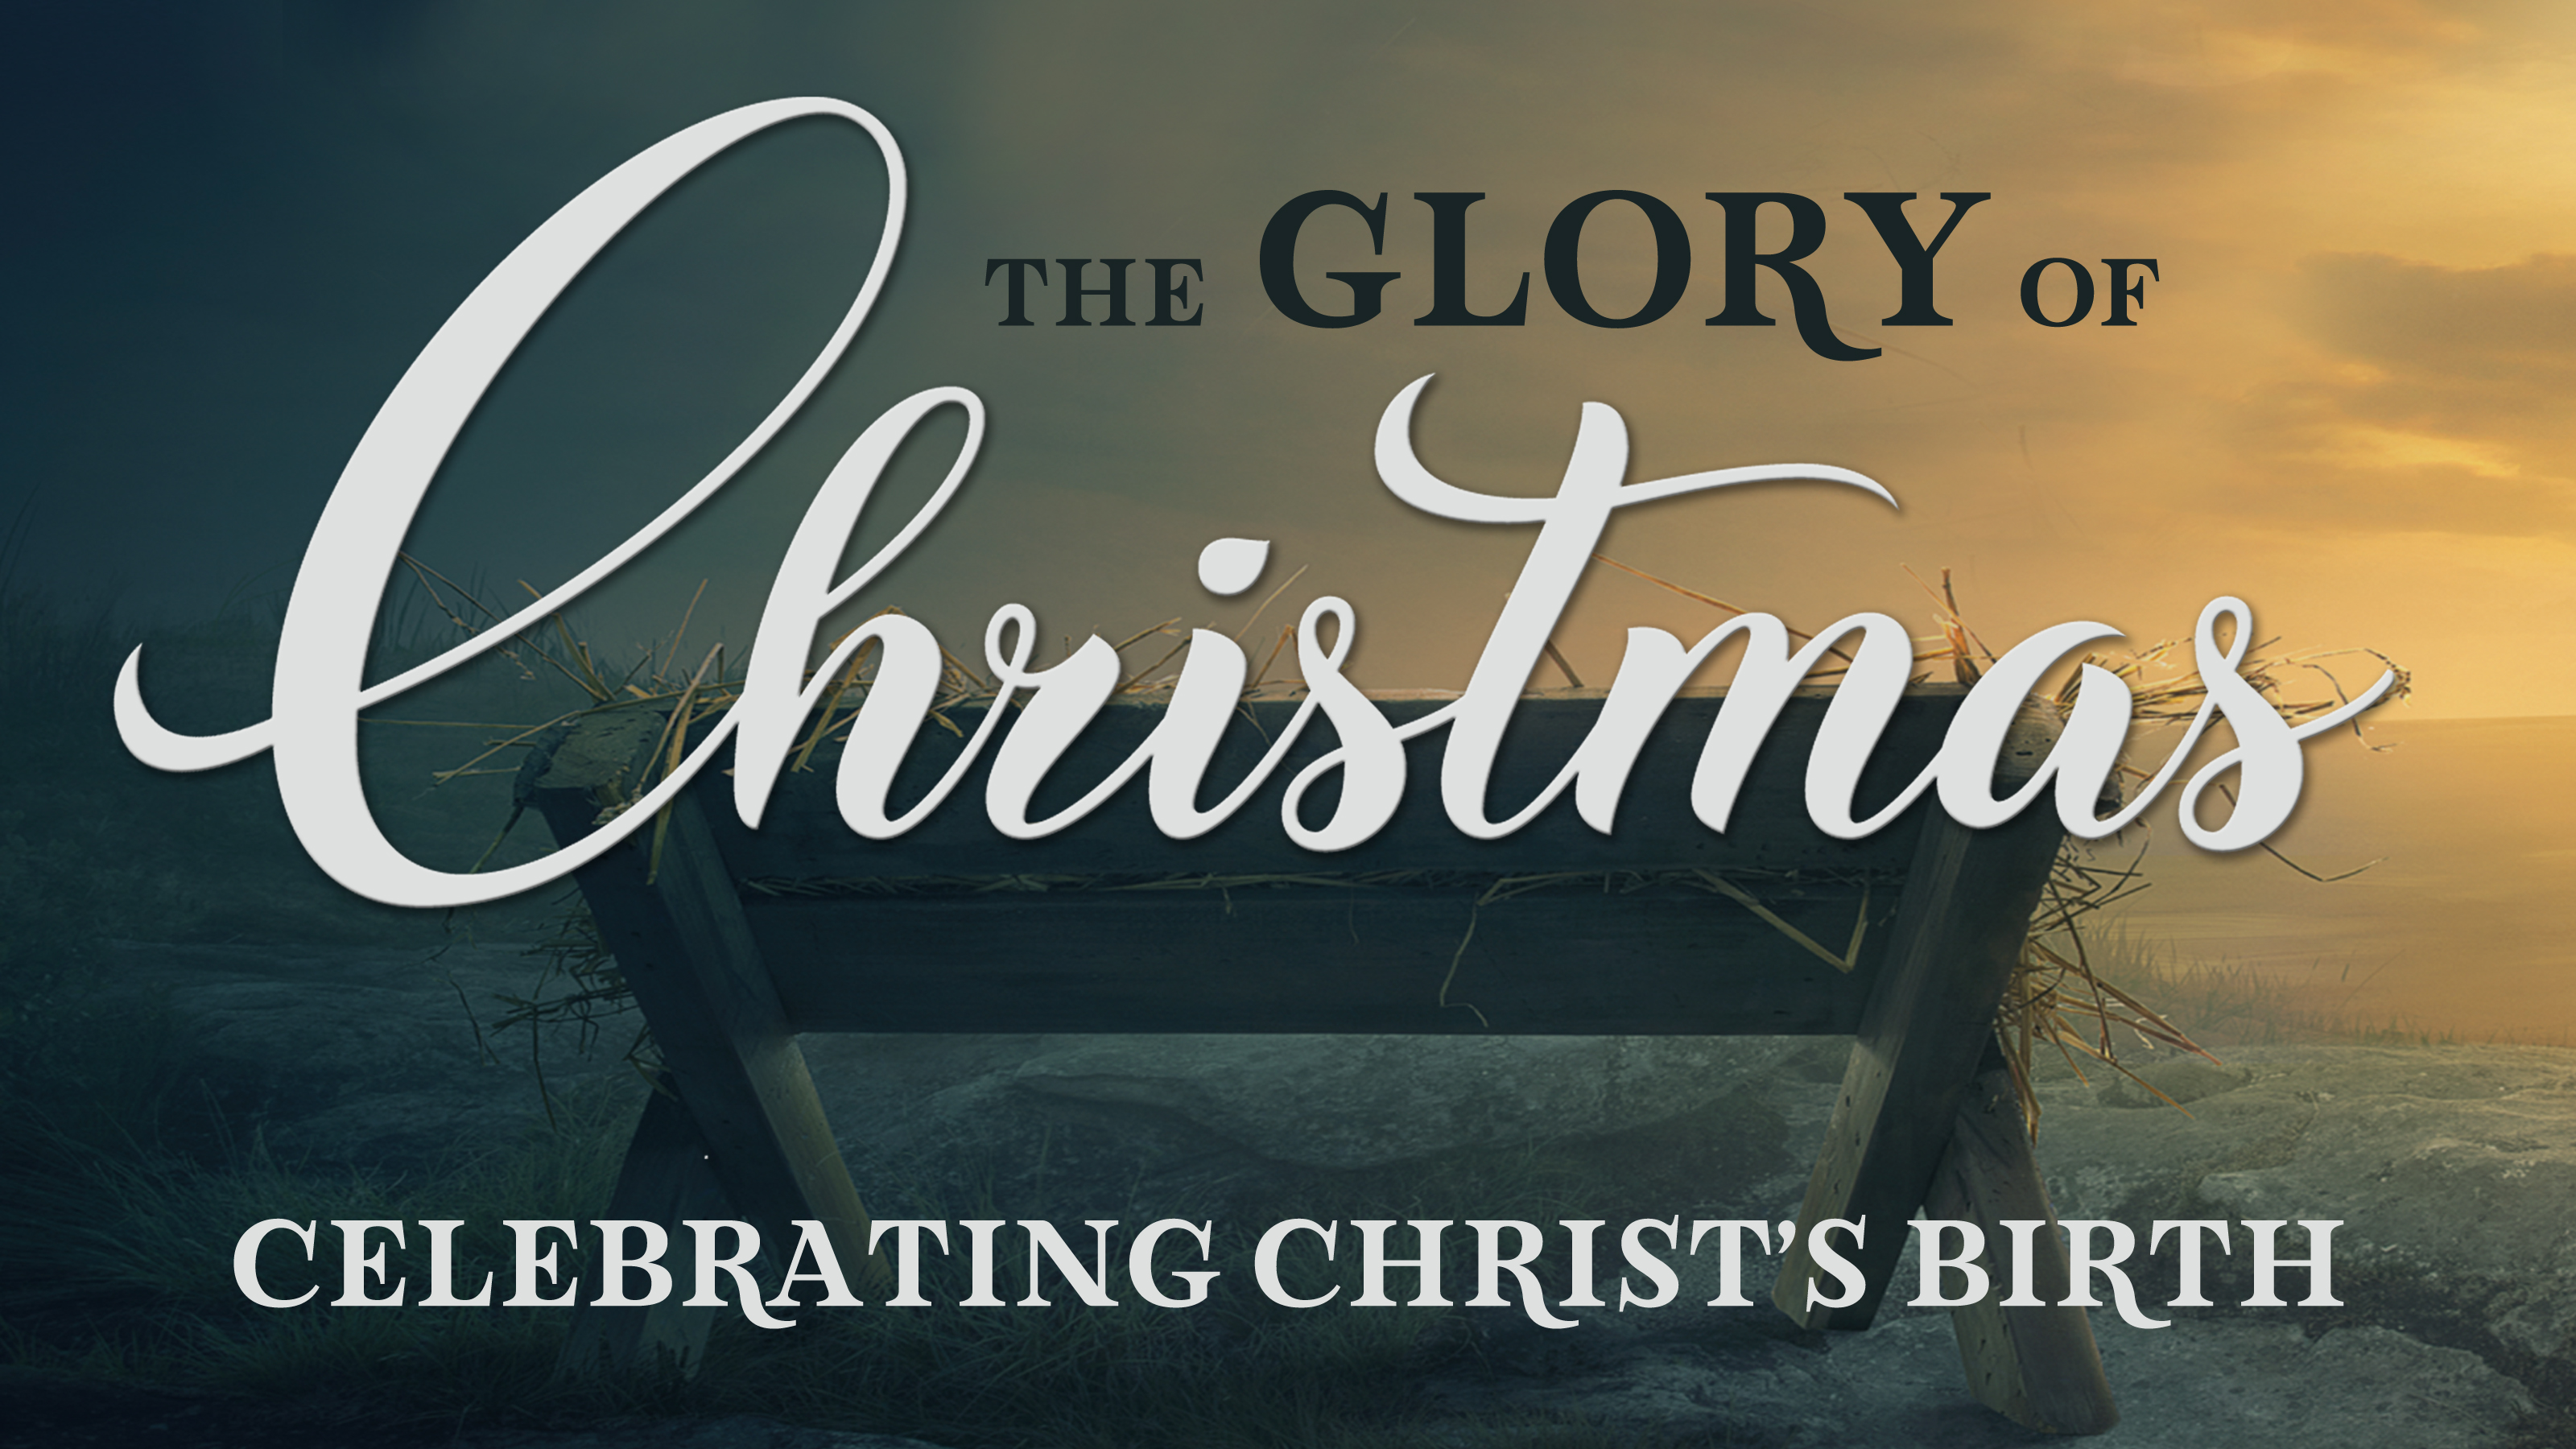 The Glory of Christmas Bible Baptist Church